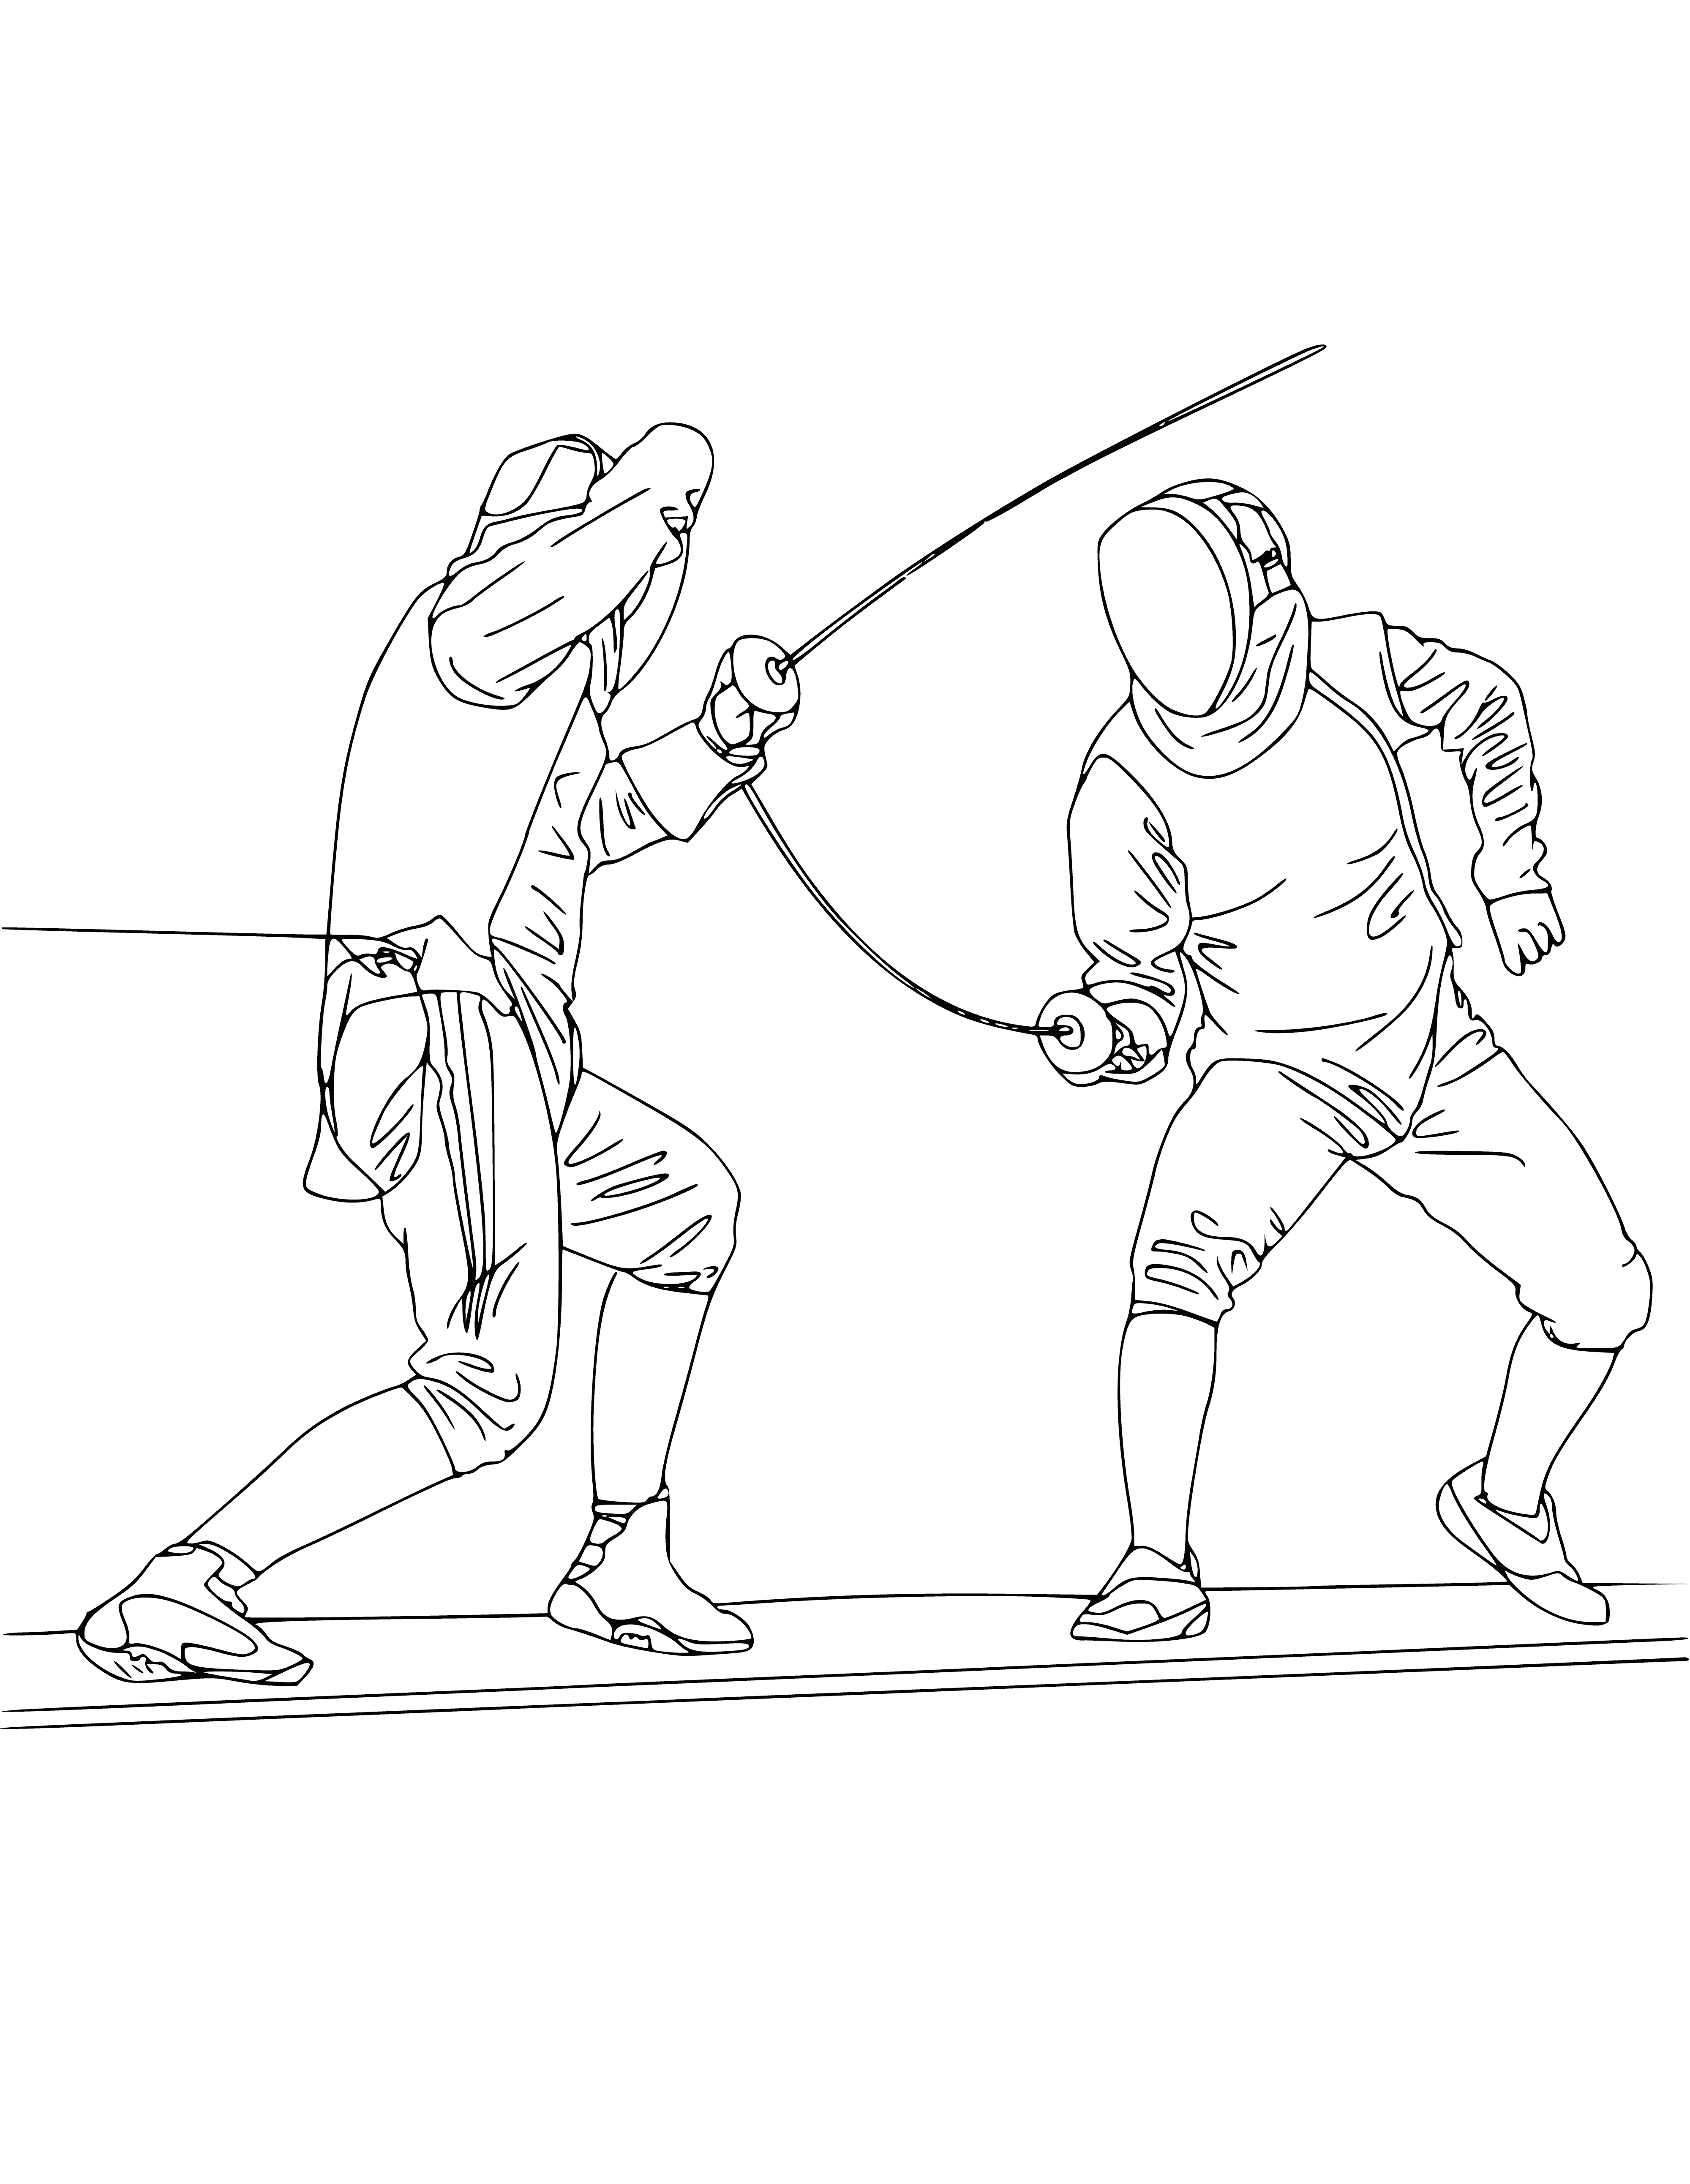 Fencing coloring page